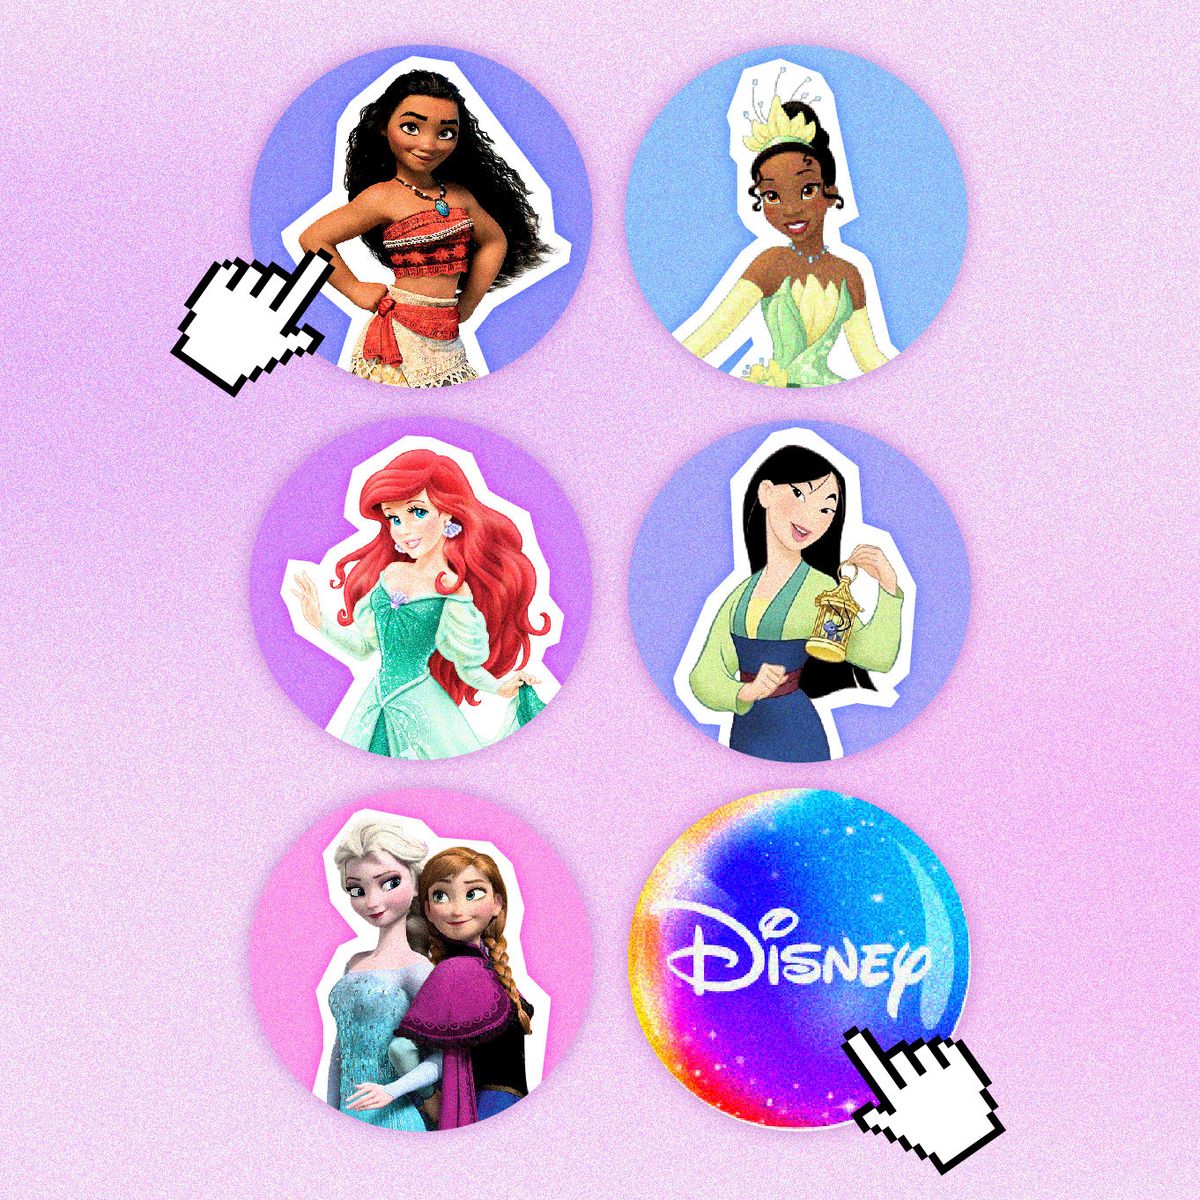 Which Disney Princess Are You? - Take the Disney Princess Quiz 2023